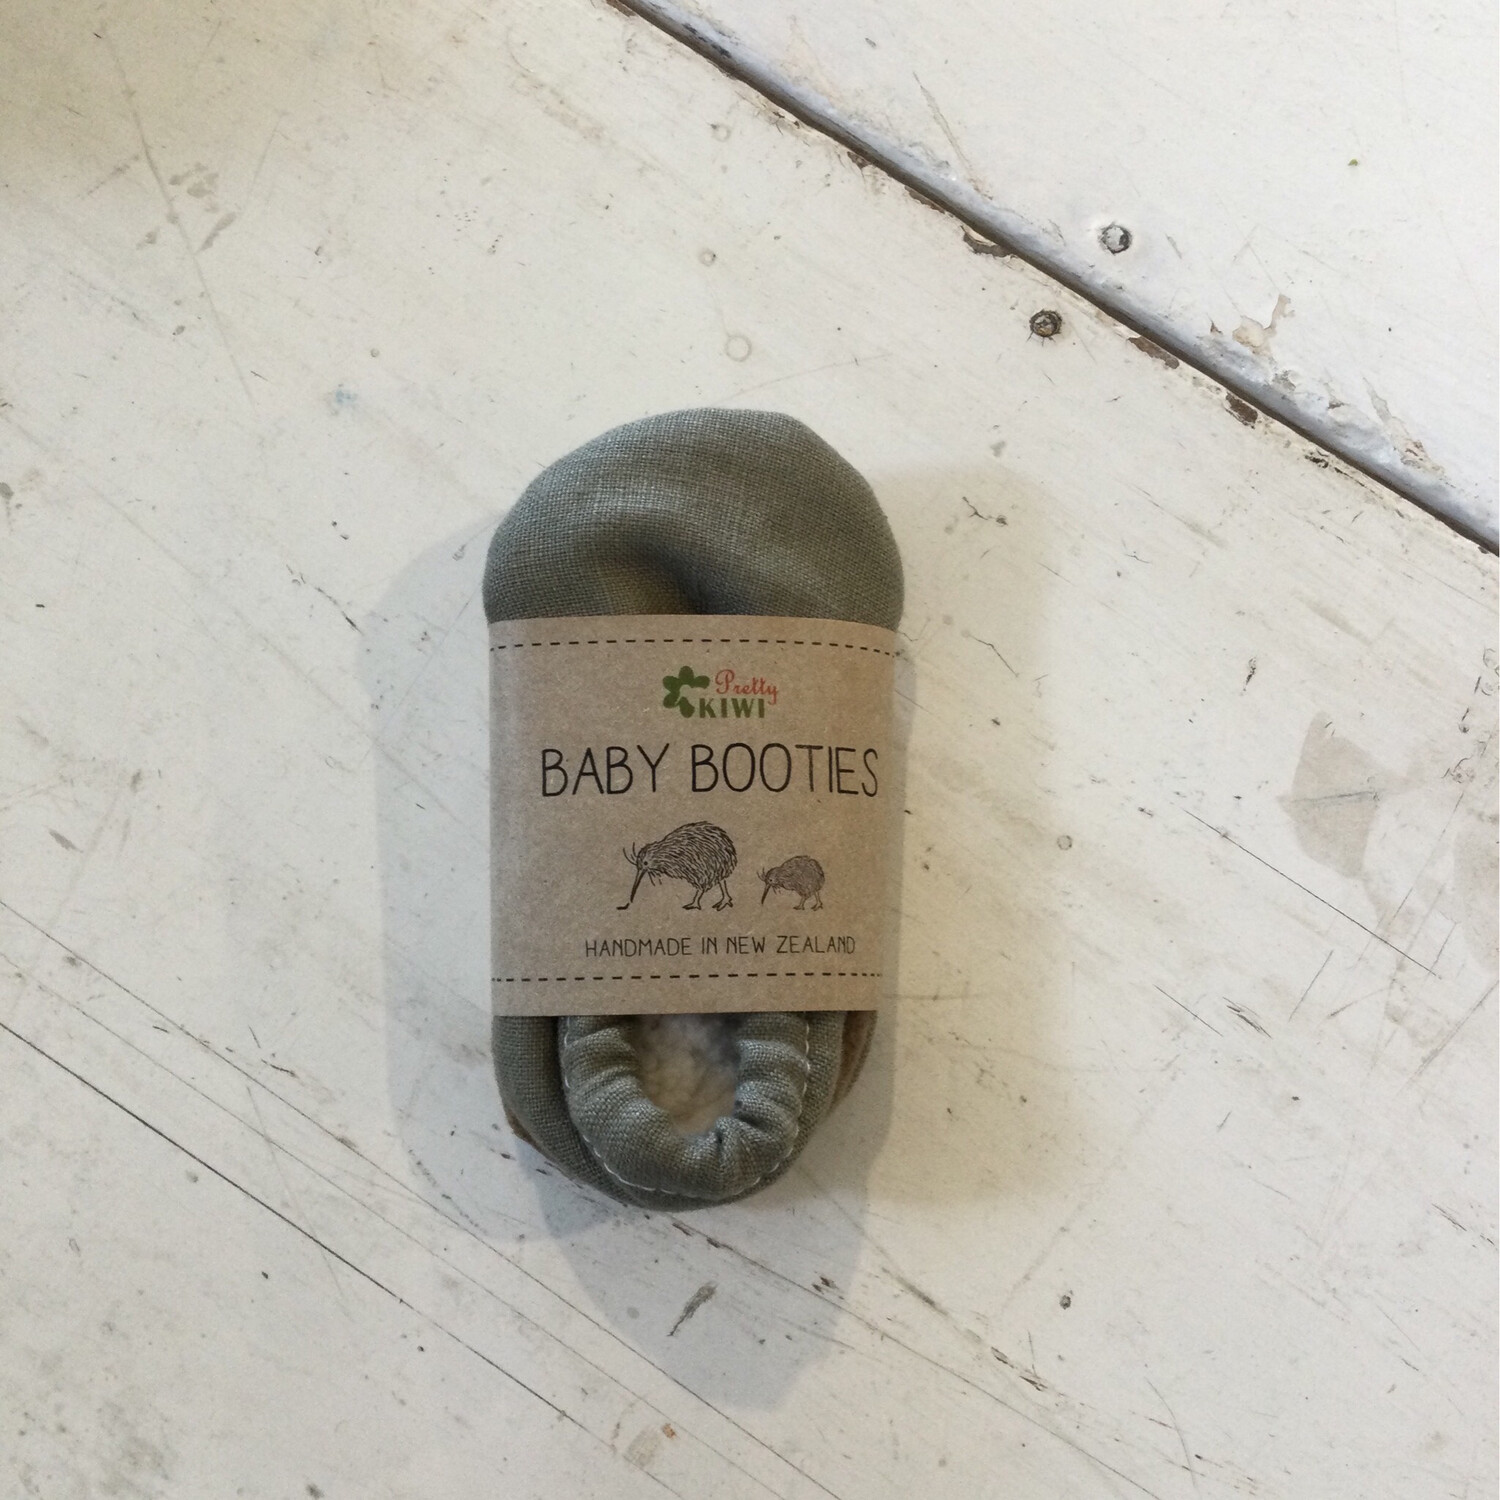 Baby Booties by Pretty Kiwi